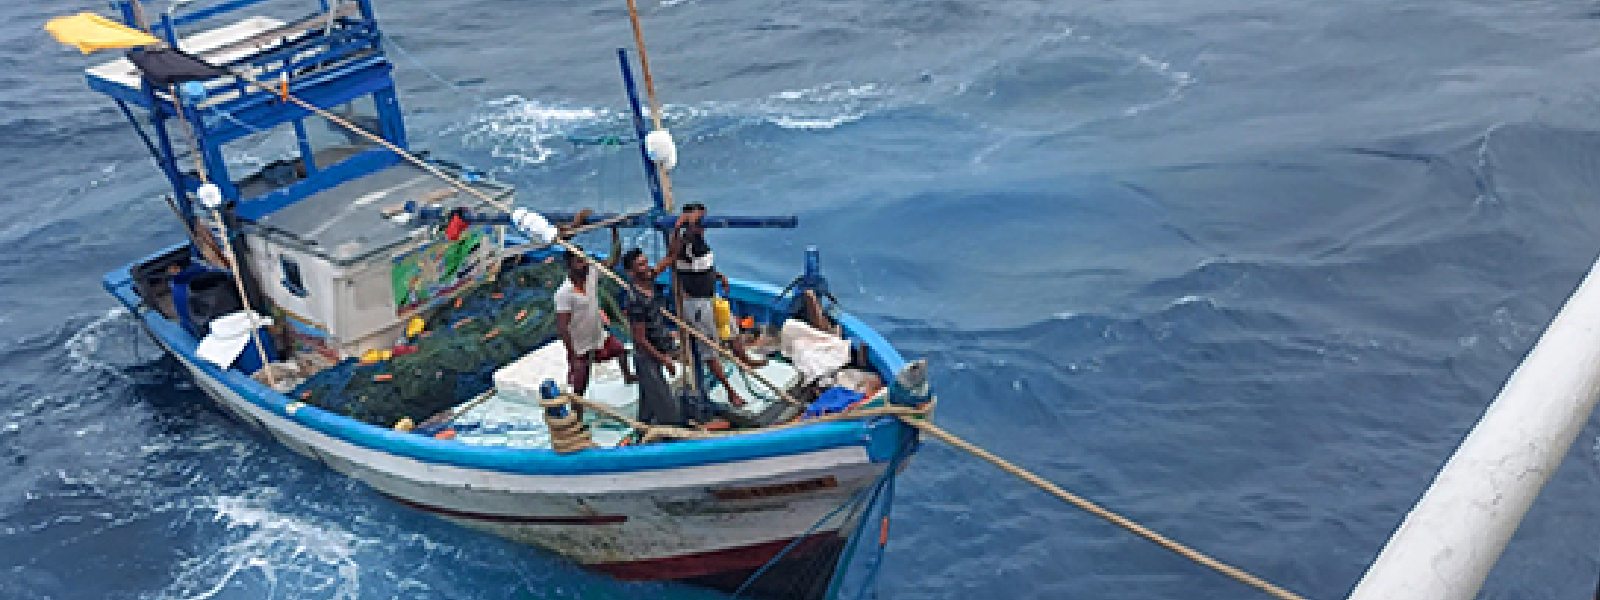 Distressed fishermen in high seas rescued